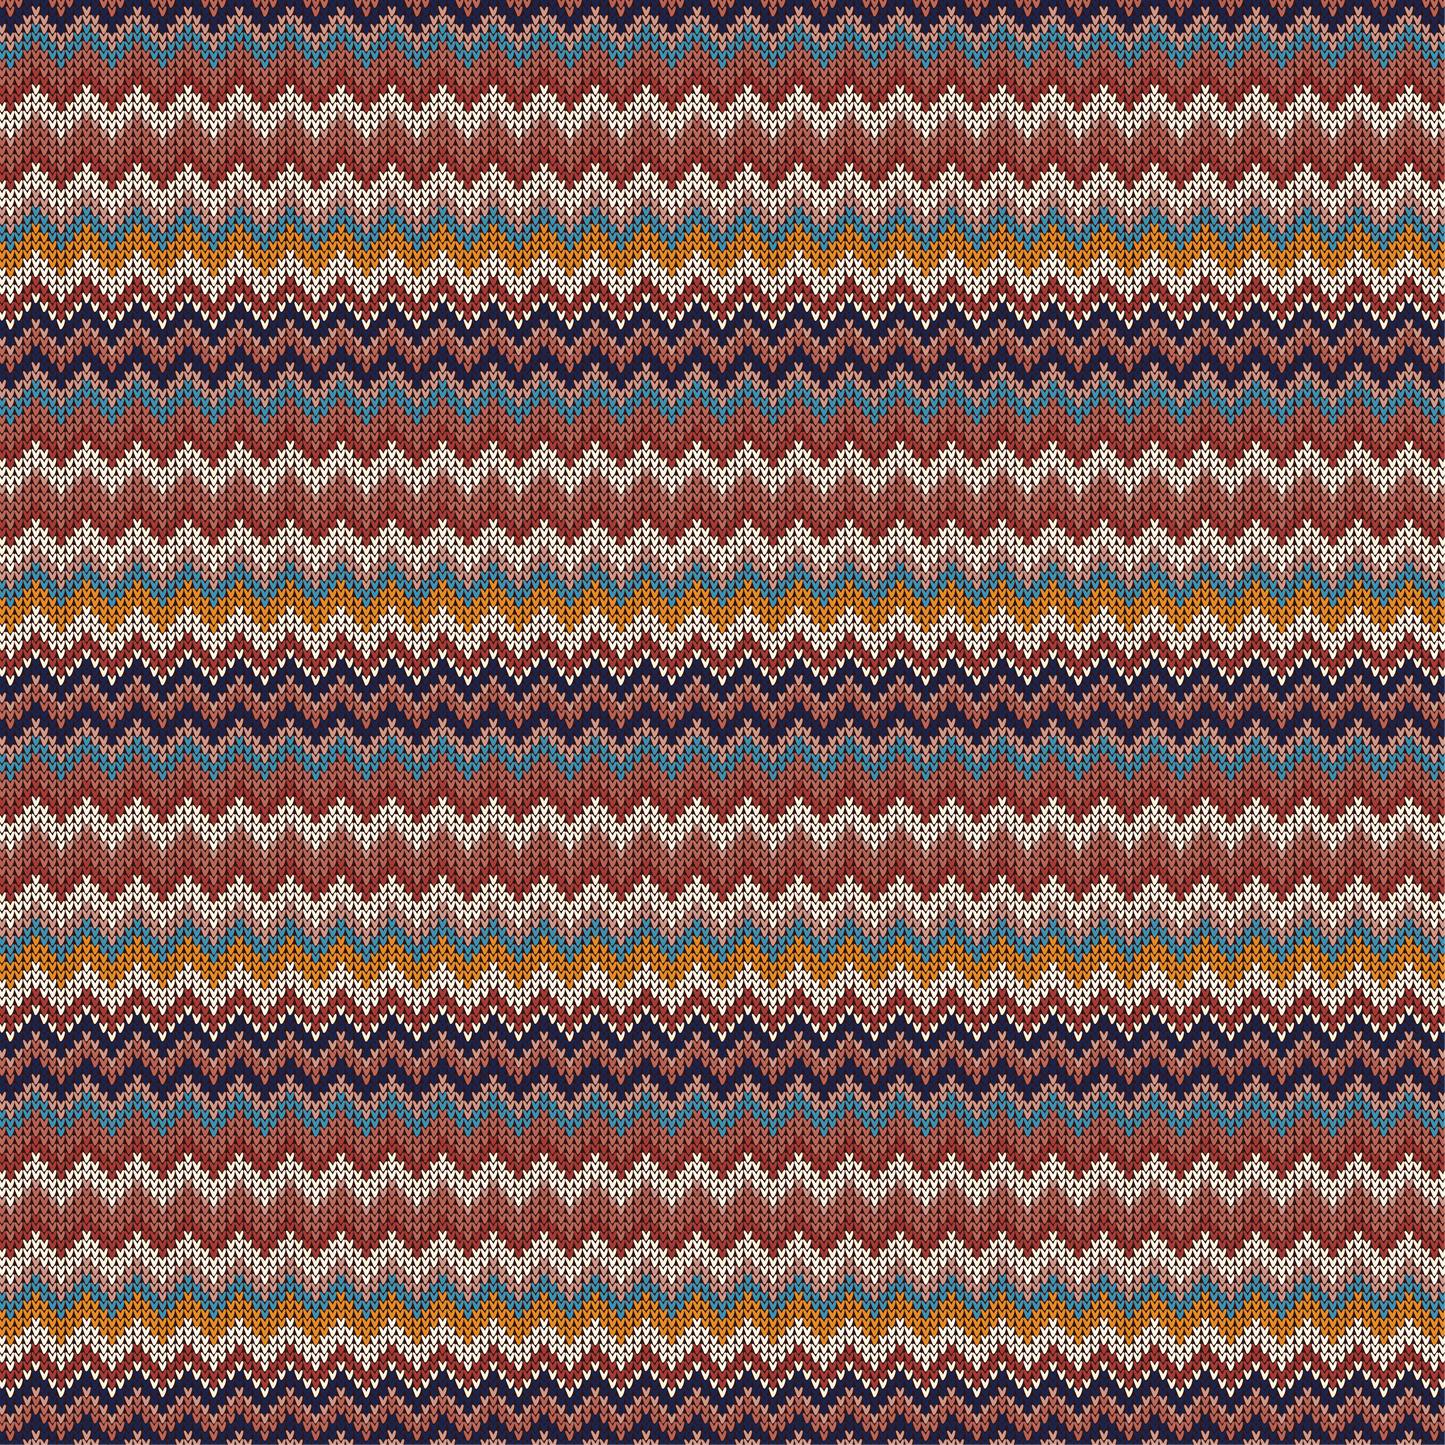 Knitting Yarn - Multi-Colored Stripes 013